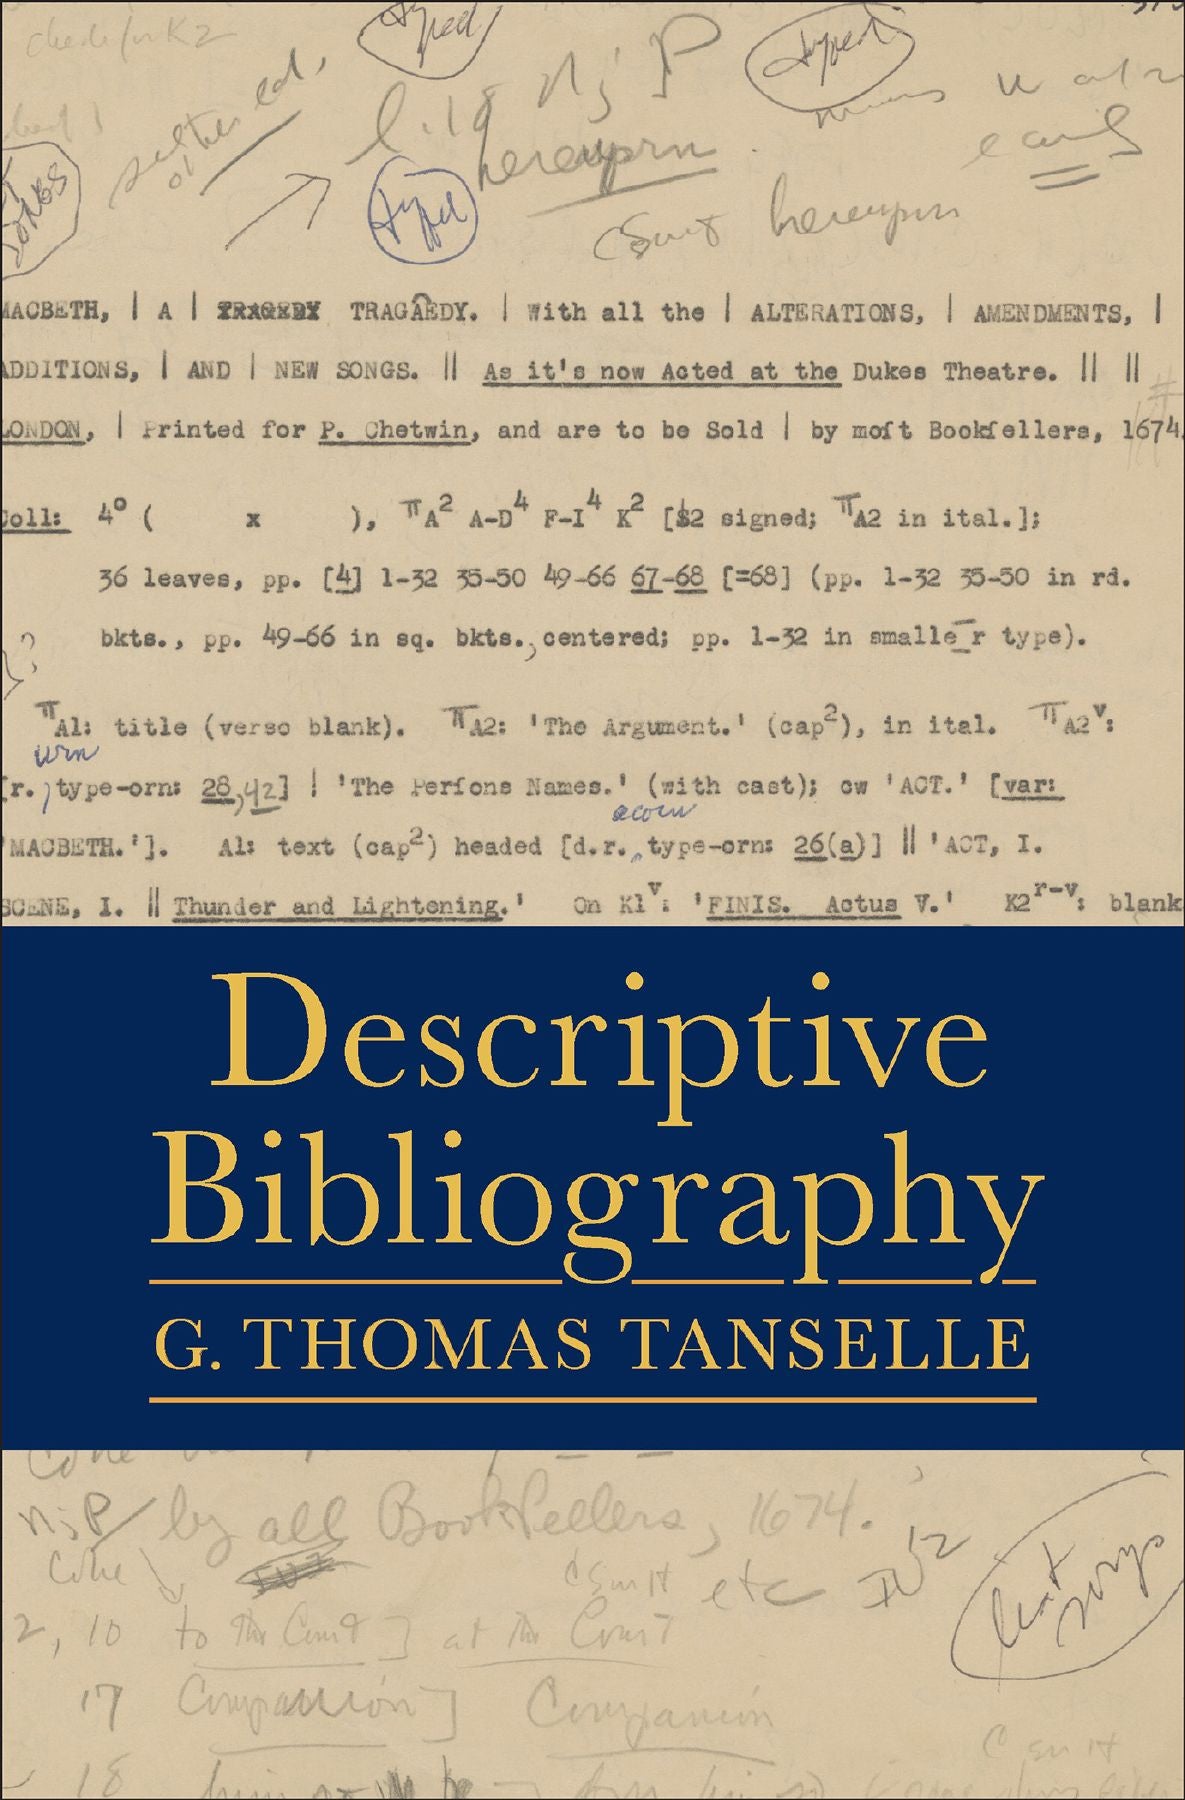 DESCRIPTIVE BIBLIOGRAPHY by G. Thomas Tanselle on Oak Knoll